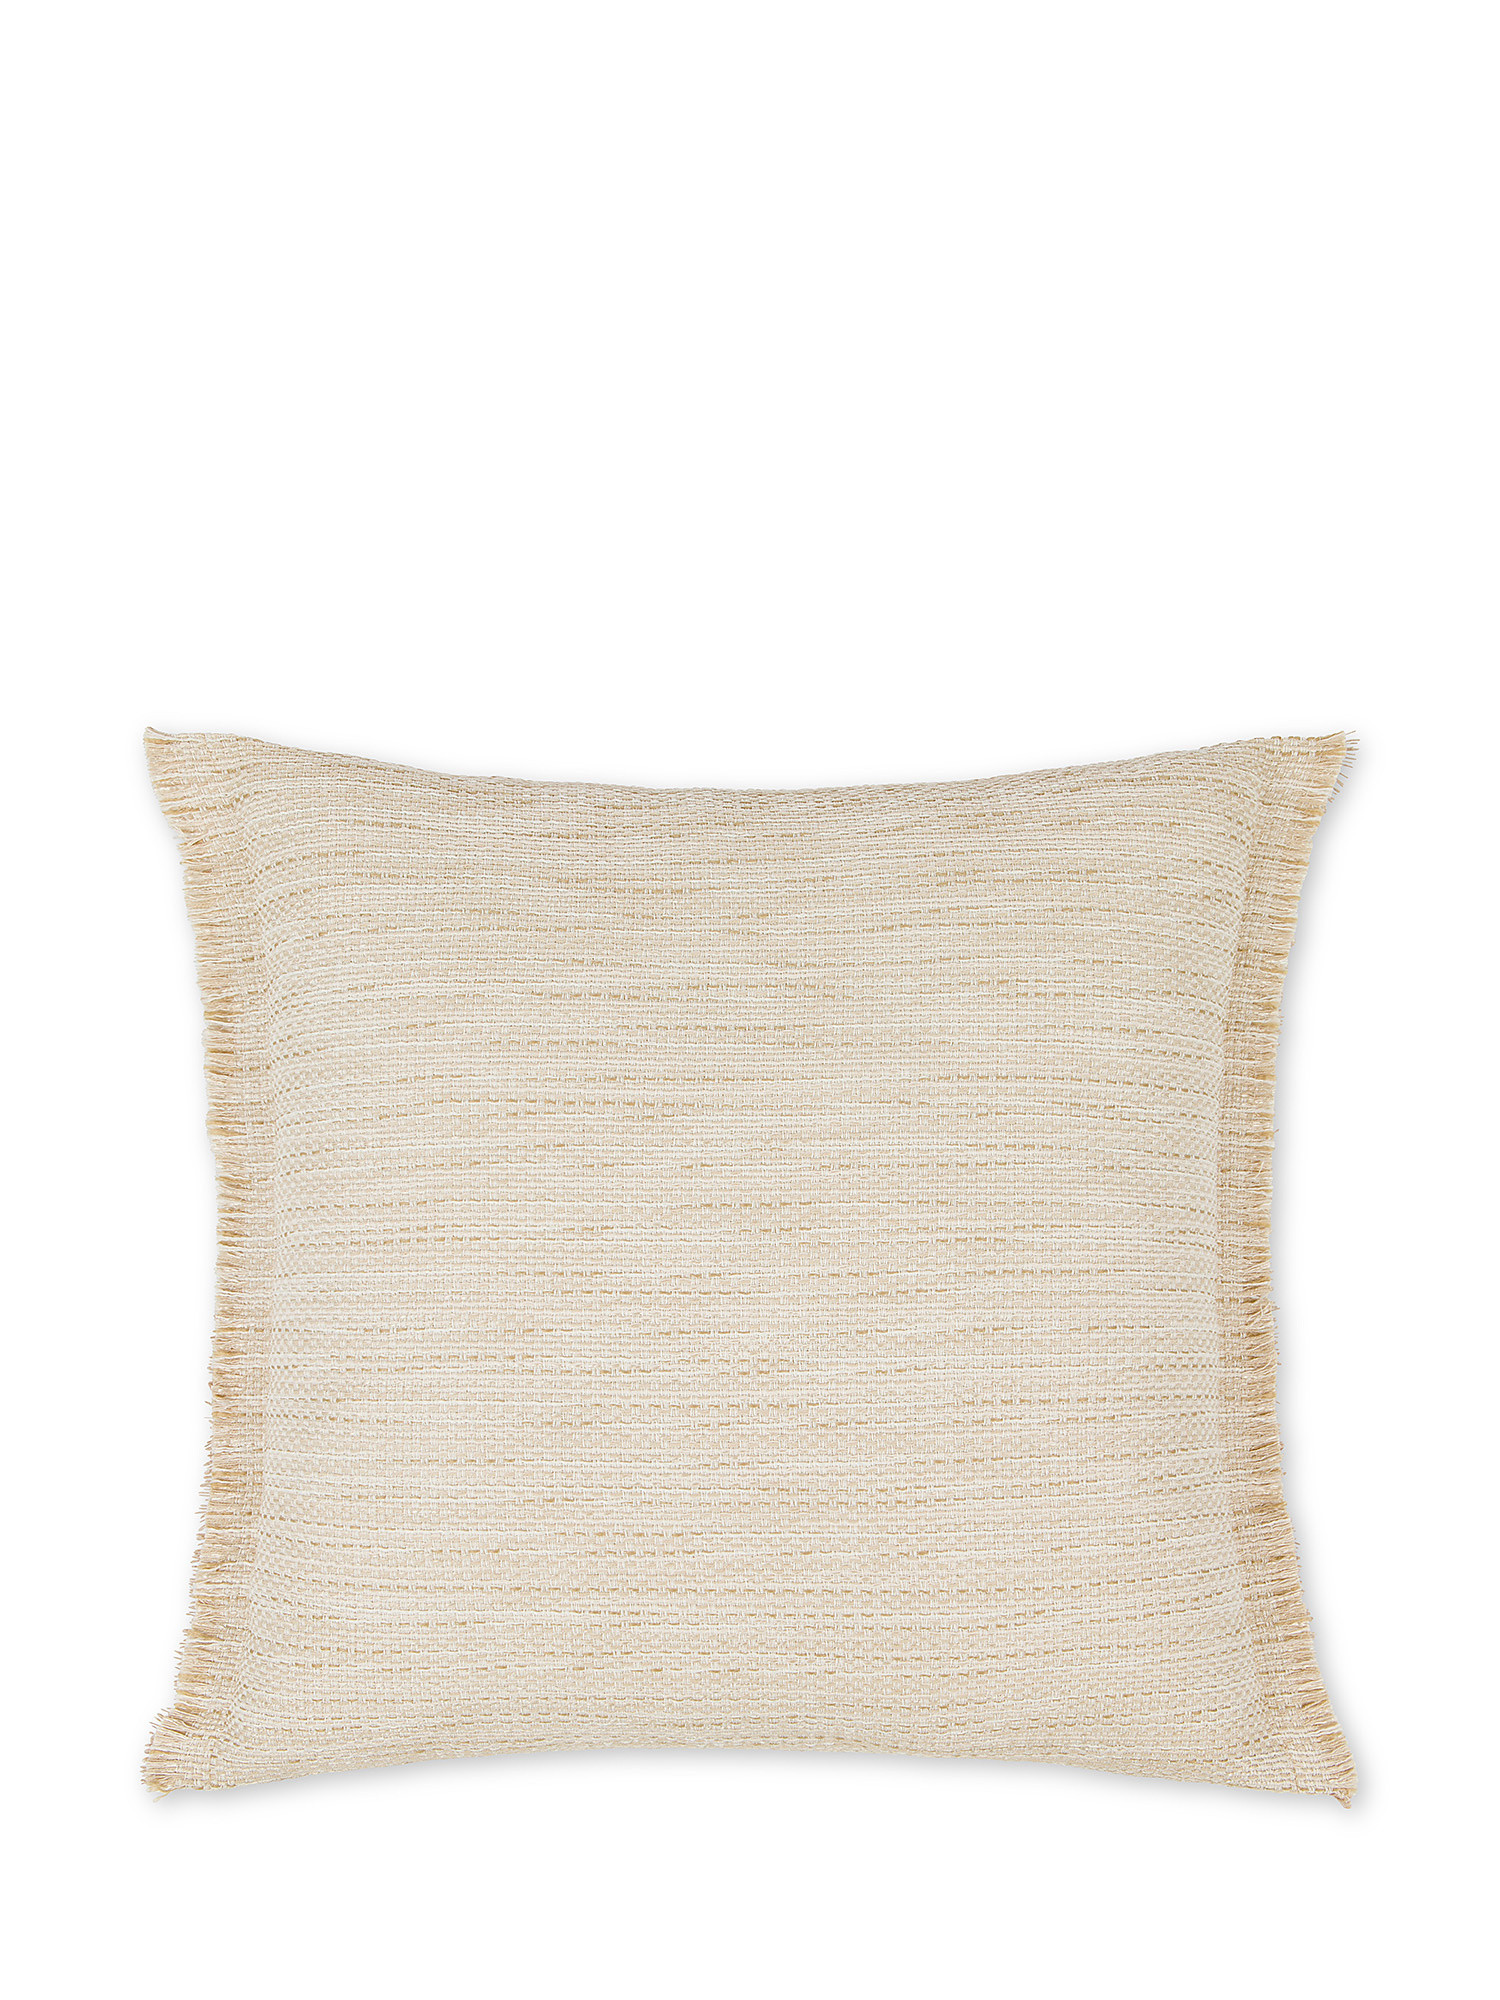 Cushion 45x45 cm with fringes, Beige, large image number 0